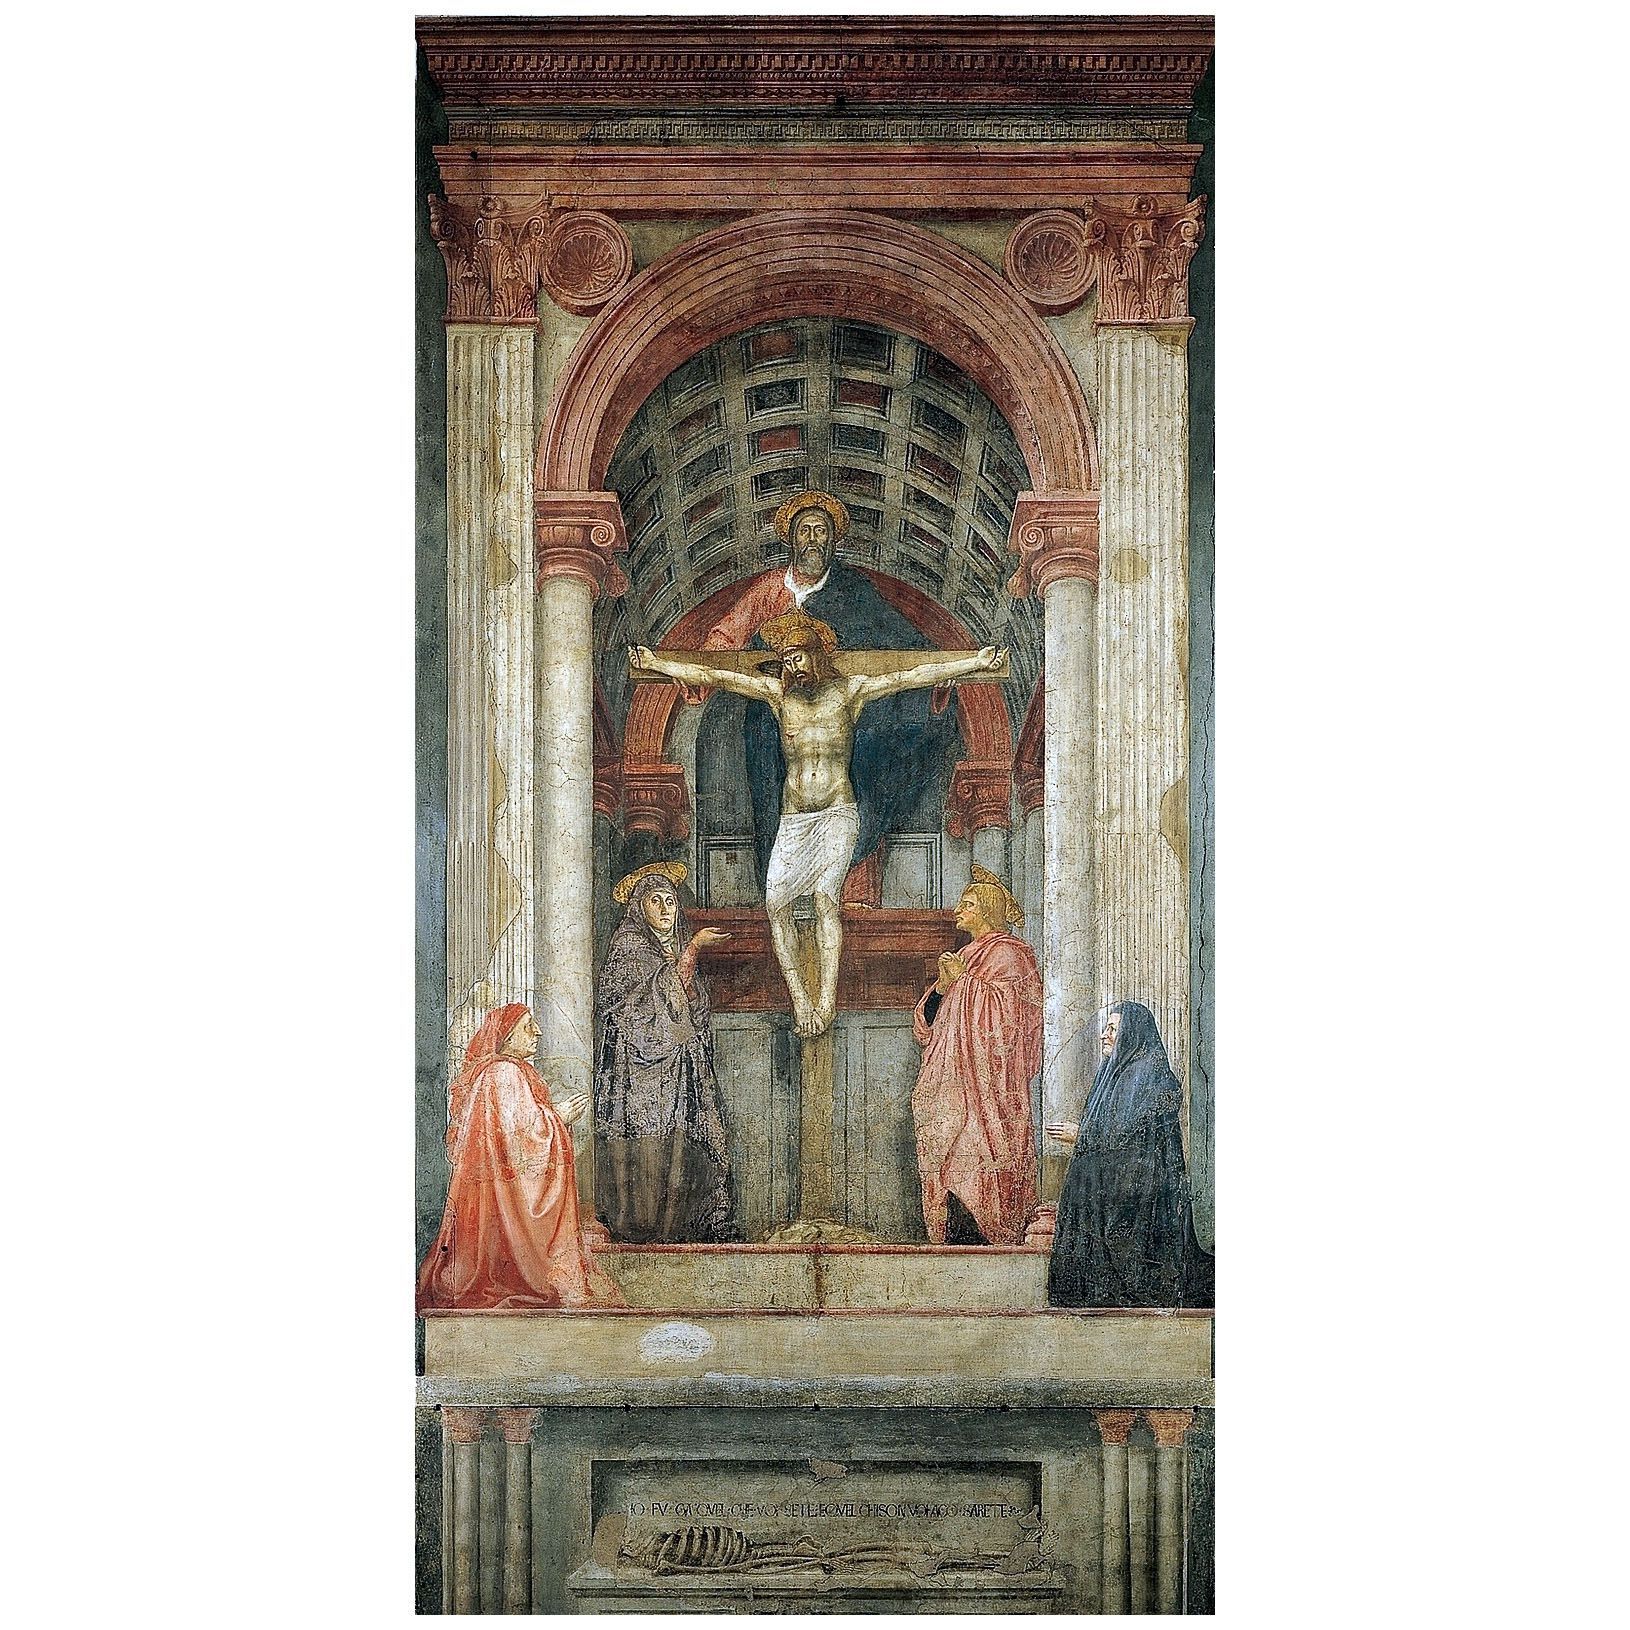 Мазаччо. Троица. 1426-1428. Санта Мария Новелла, Флоренция